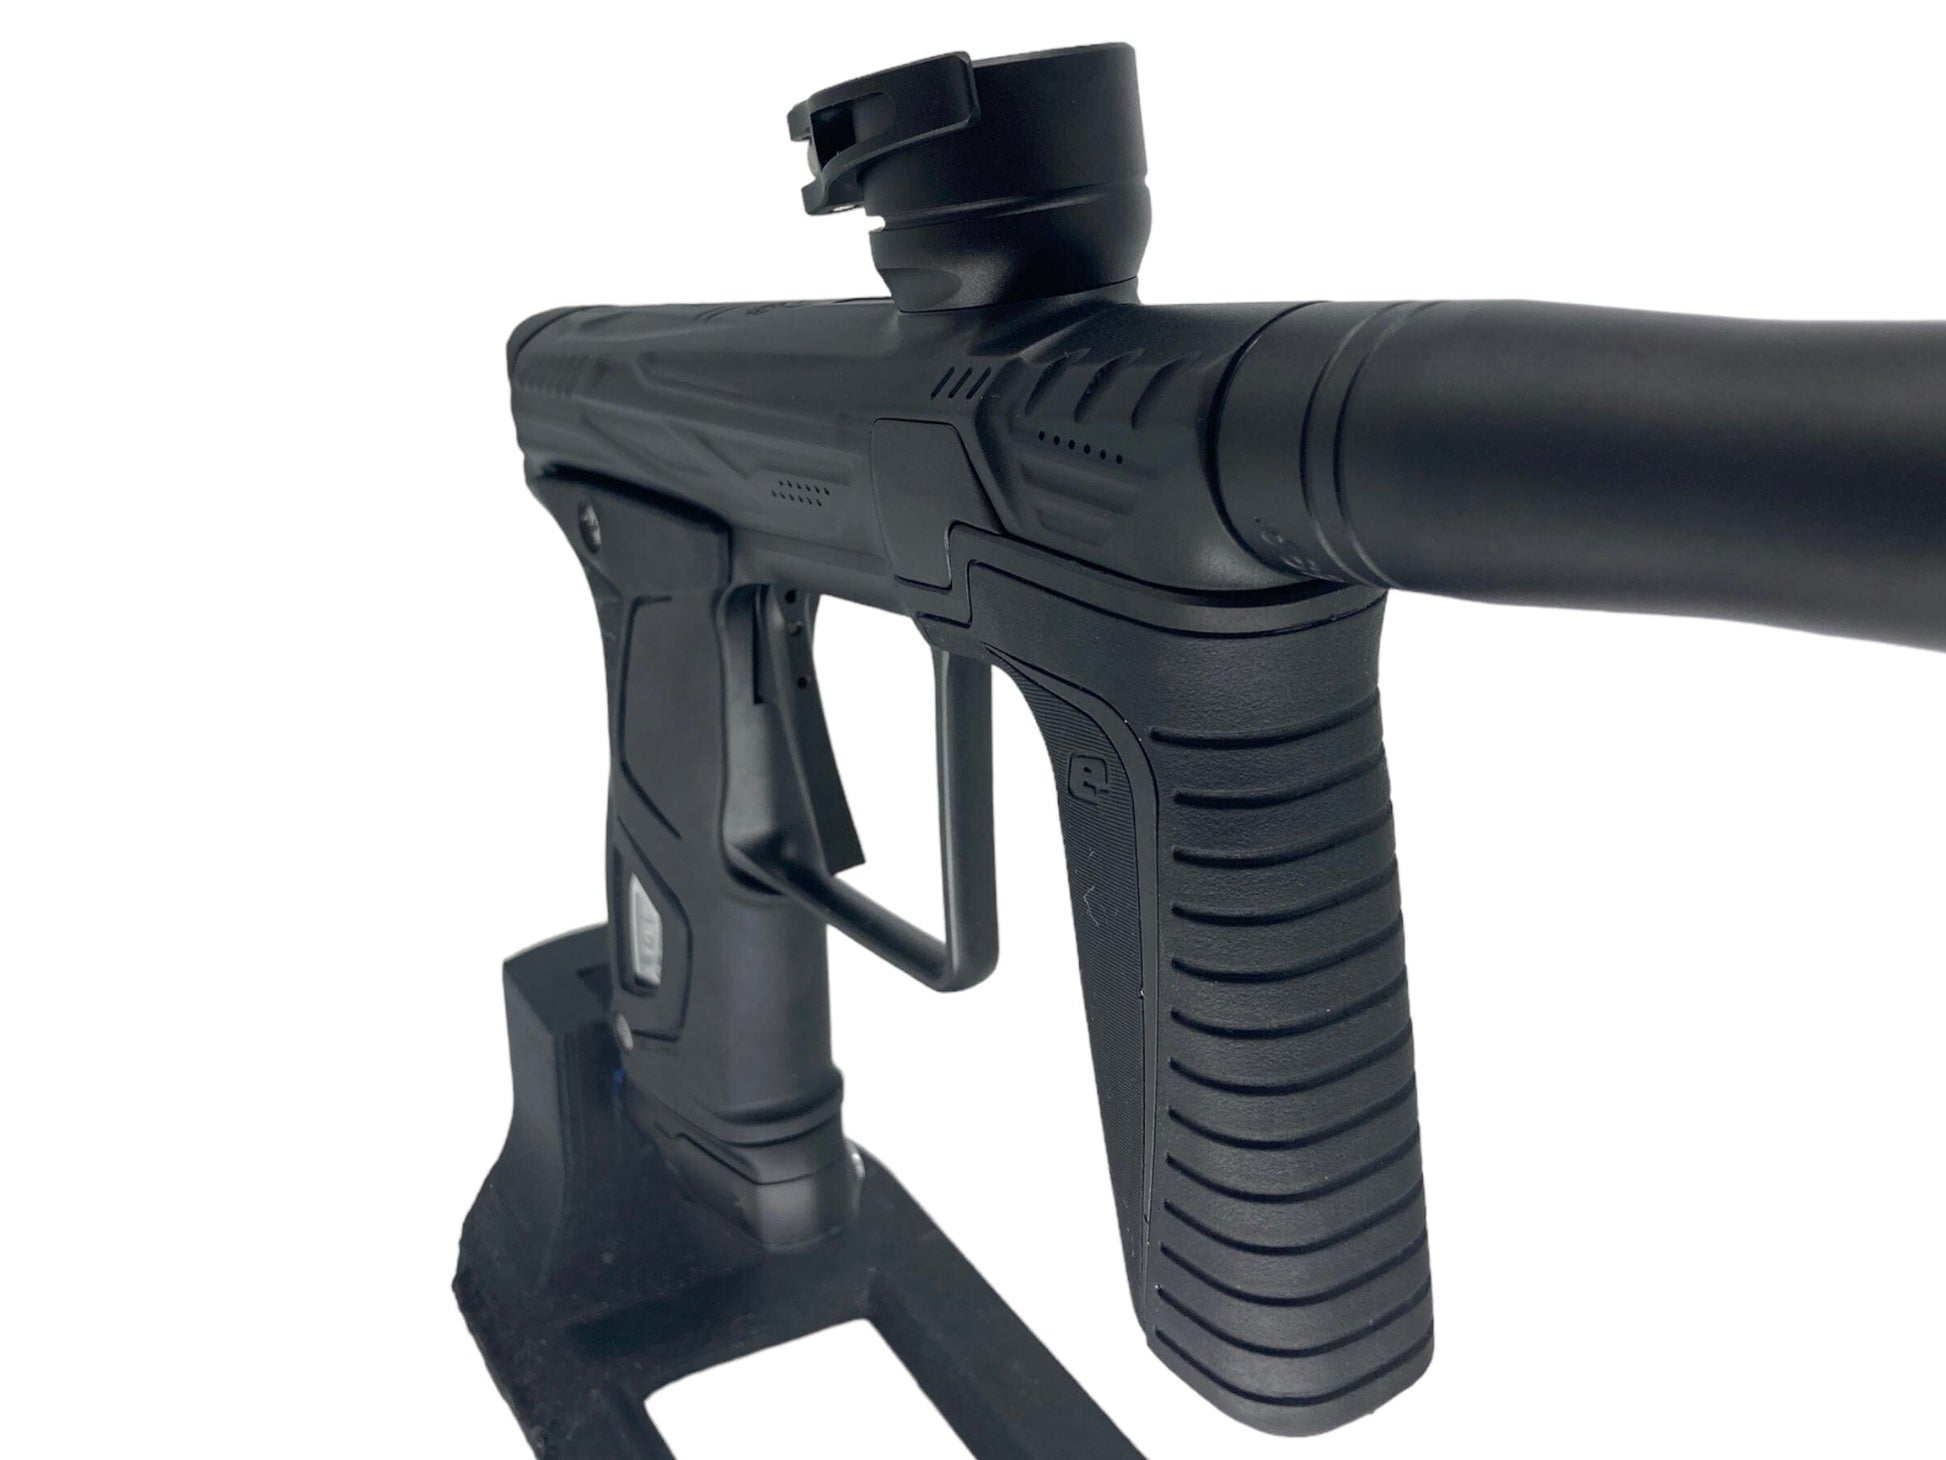 Used Hk Army Gtek 170r Paintball Gun from CPXBrosPaintball Buy/Sell/Trade Paintball Markers, Paintball Hoppers, Paintball Masks, and Hormesis Headbands